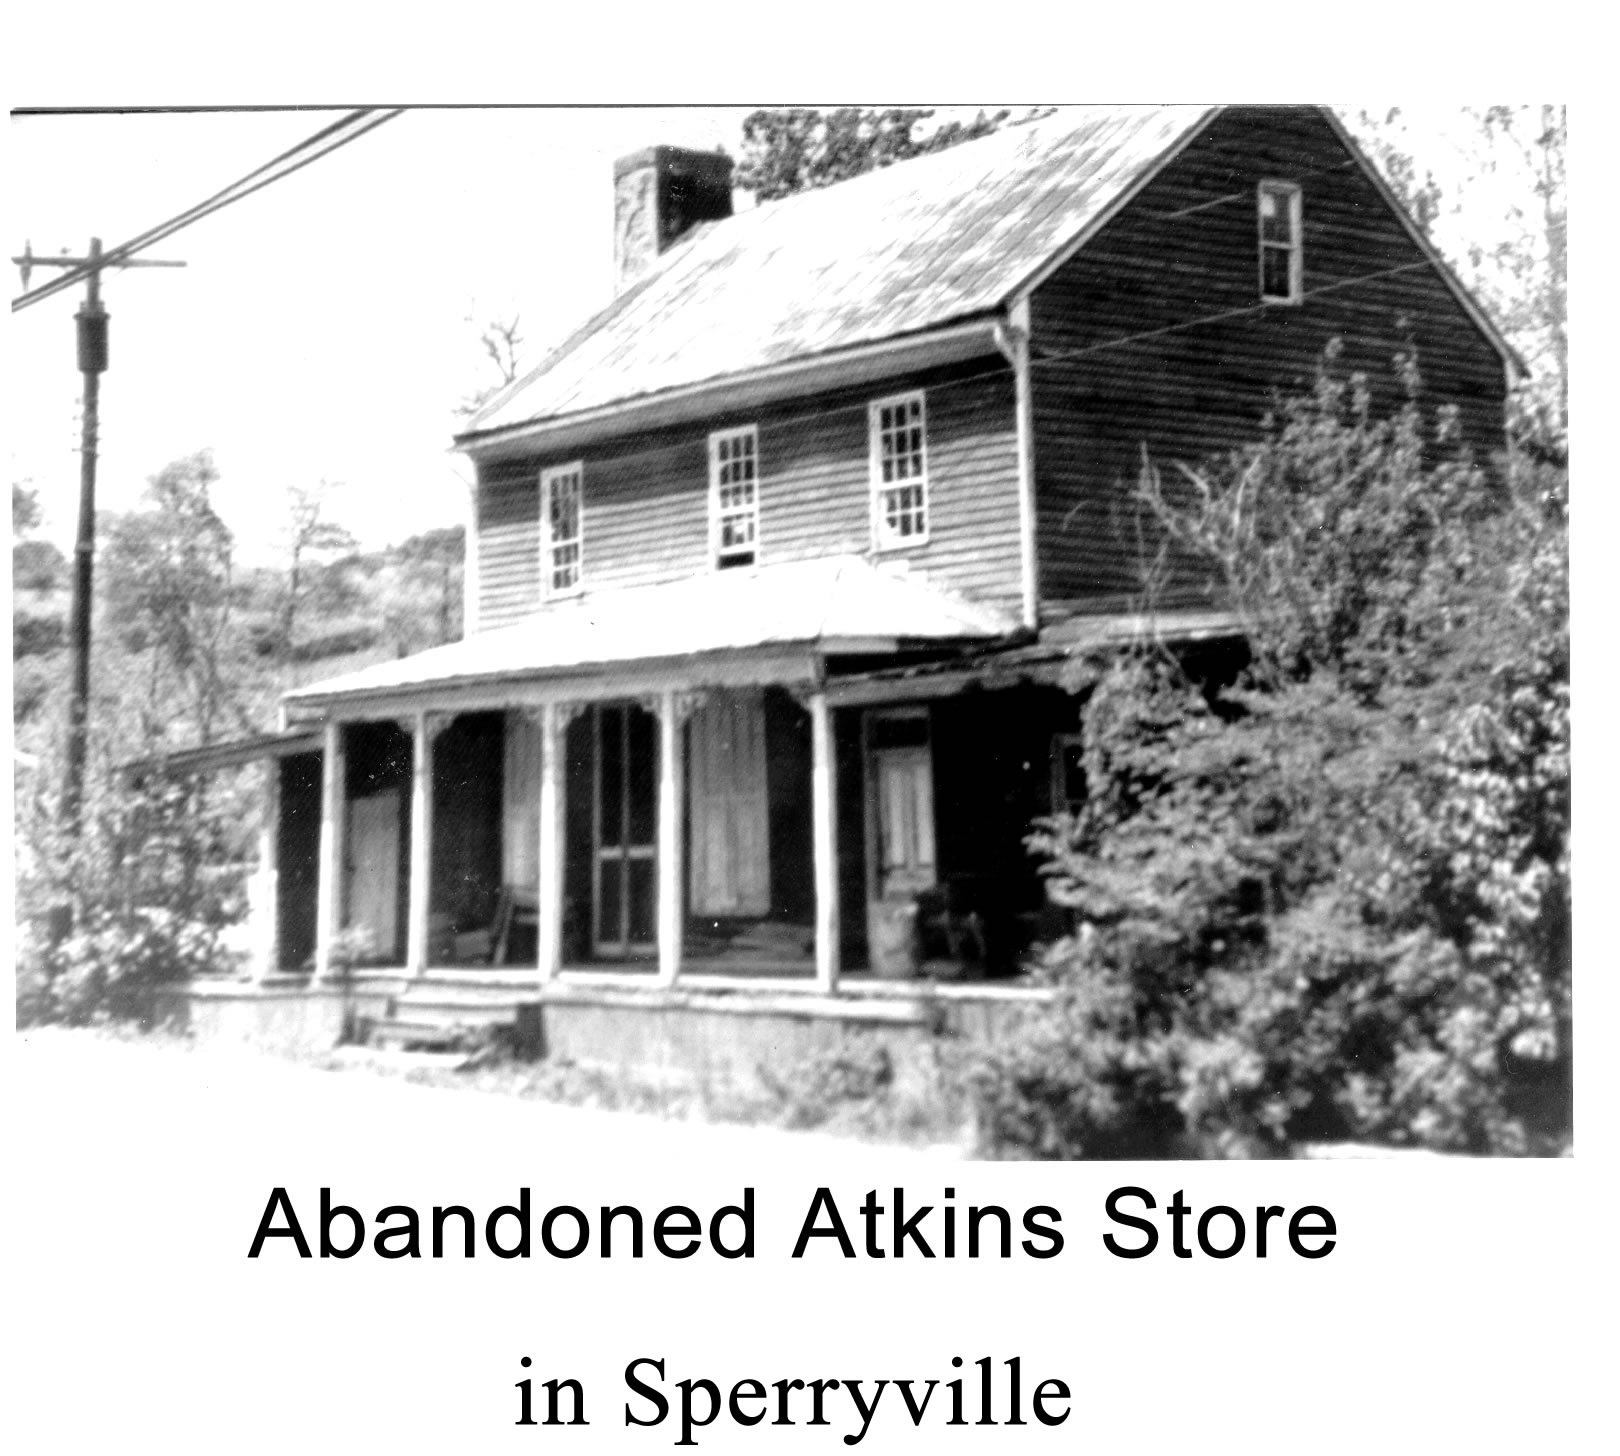 Atkins Store